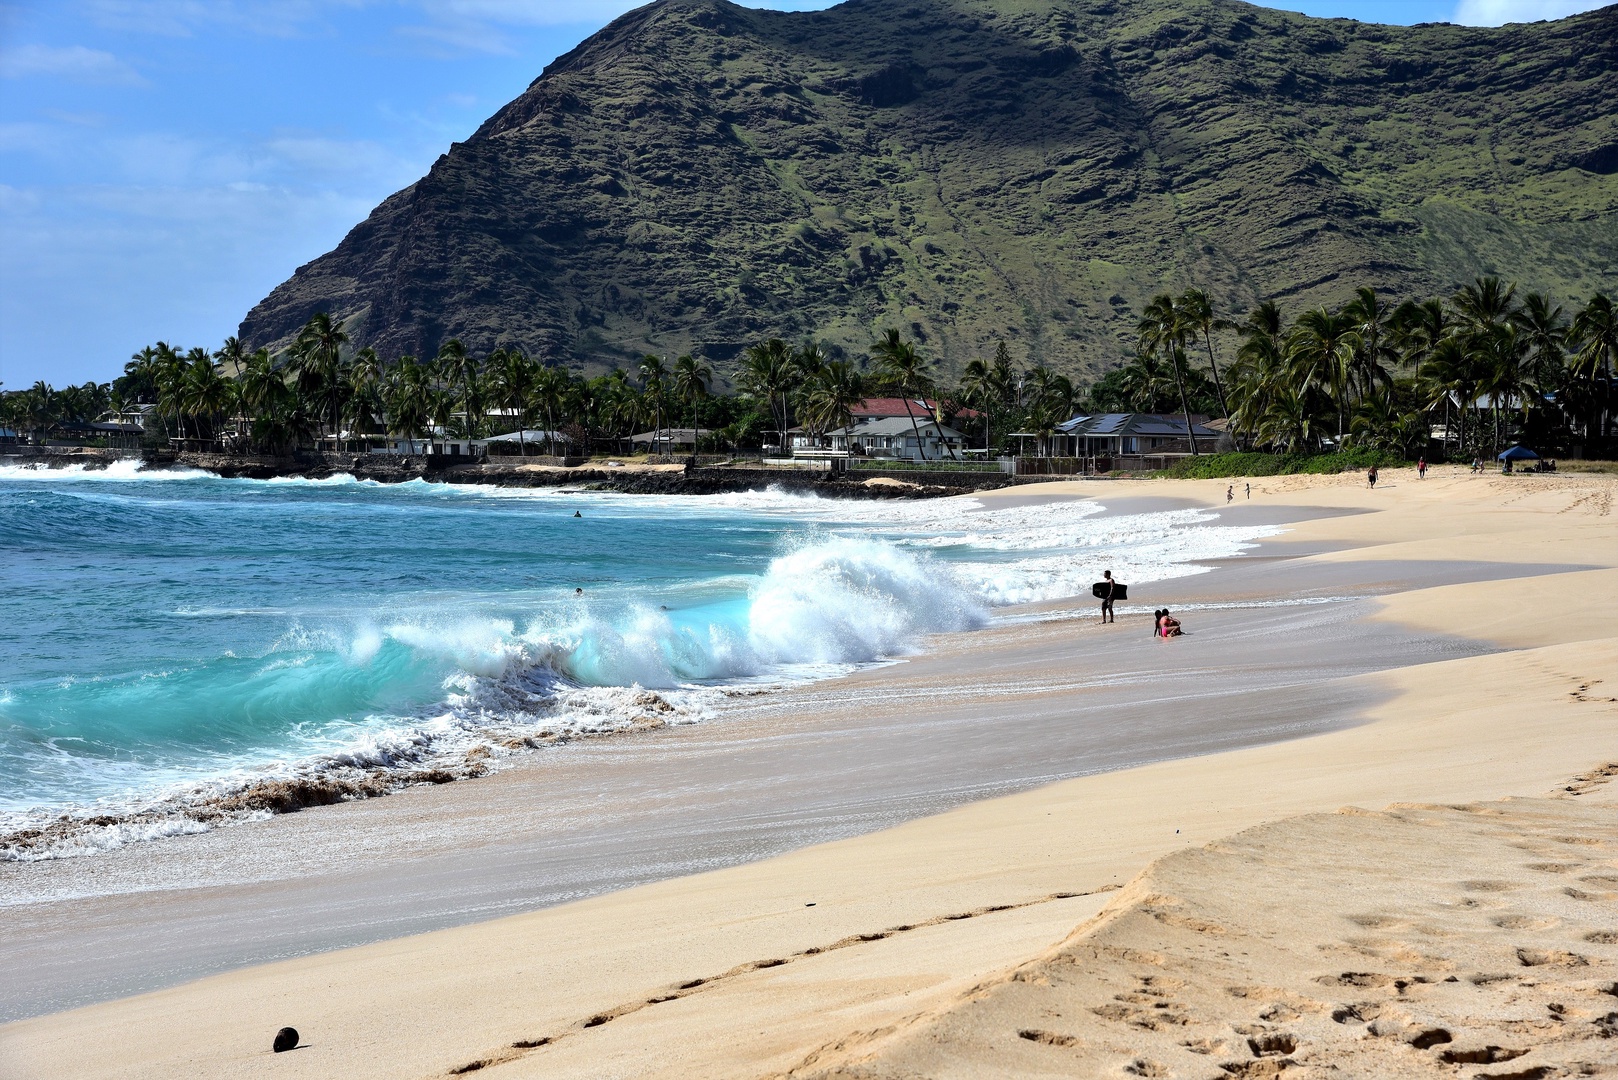 Waianae Vacation Rentals, Makaha - Hawaiian Princess - 305 - The majestic mountains and sand weathered formations along the coastline.